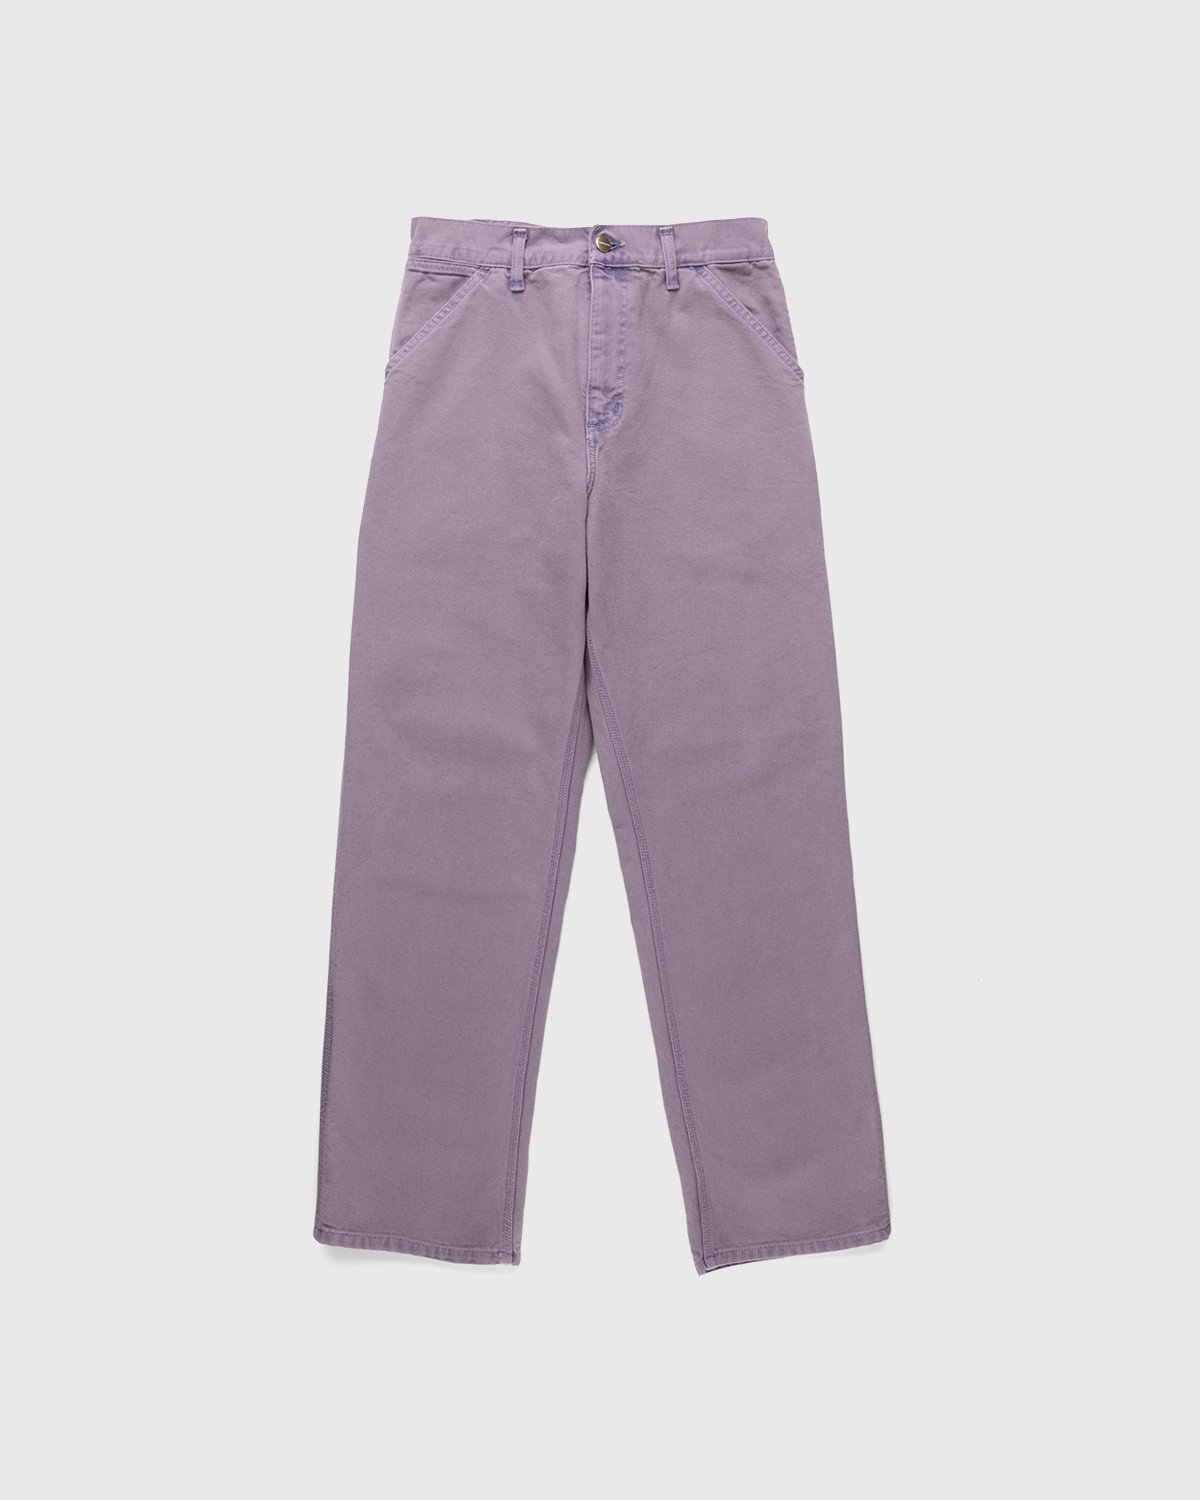 Carhartt WIP - Single Knee Pant Razzmic Faded - Clothing - Purple - Image 1